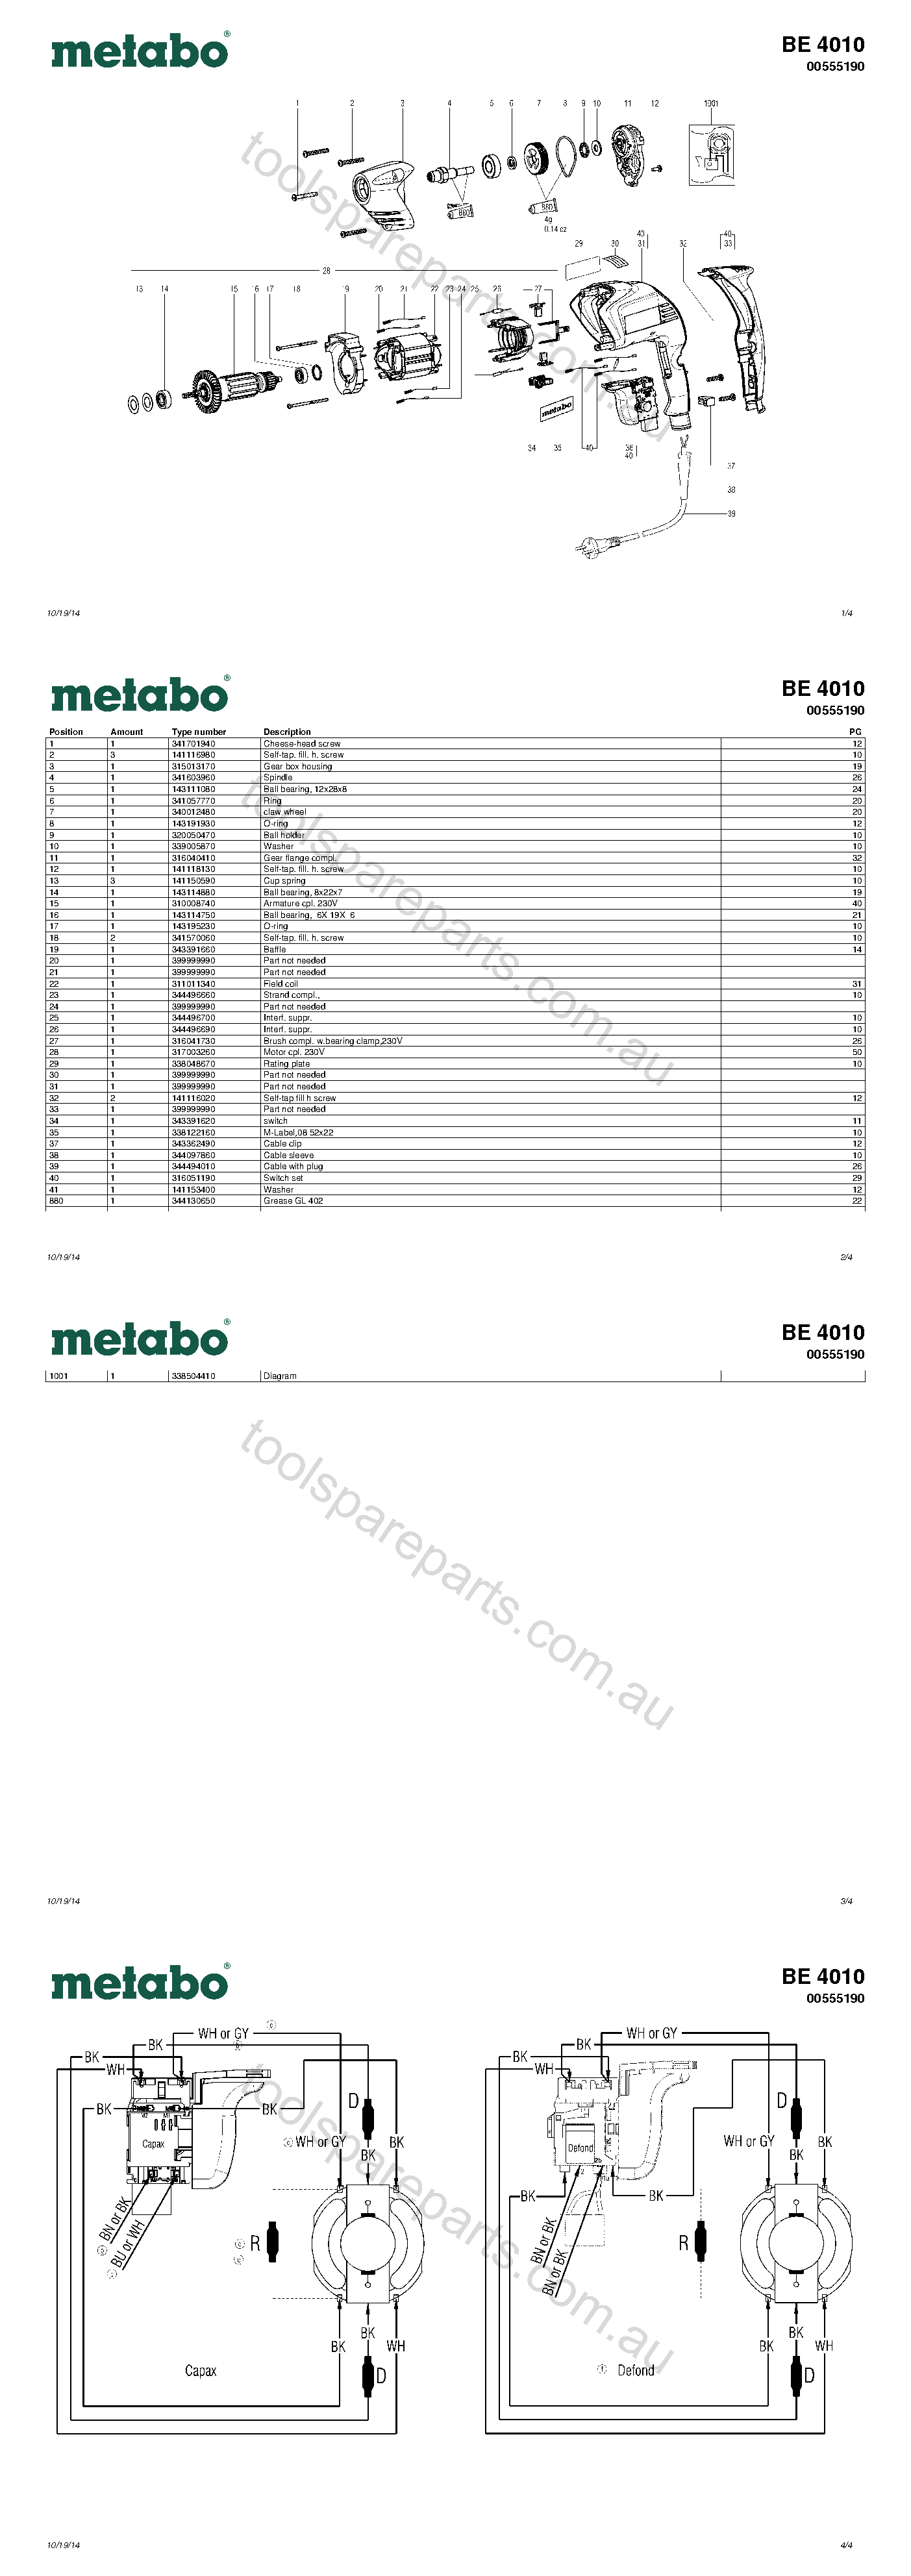 Metabo BE 4010 00555190  Diagram 1